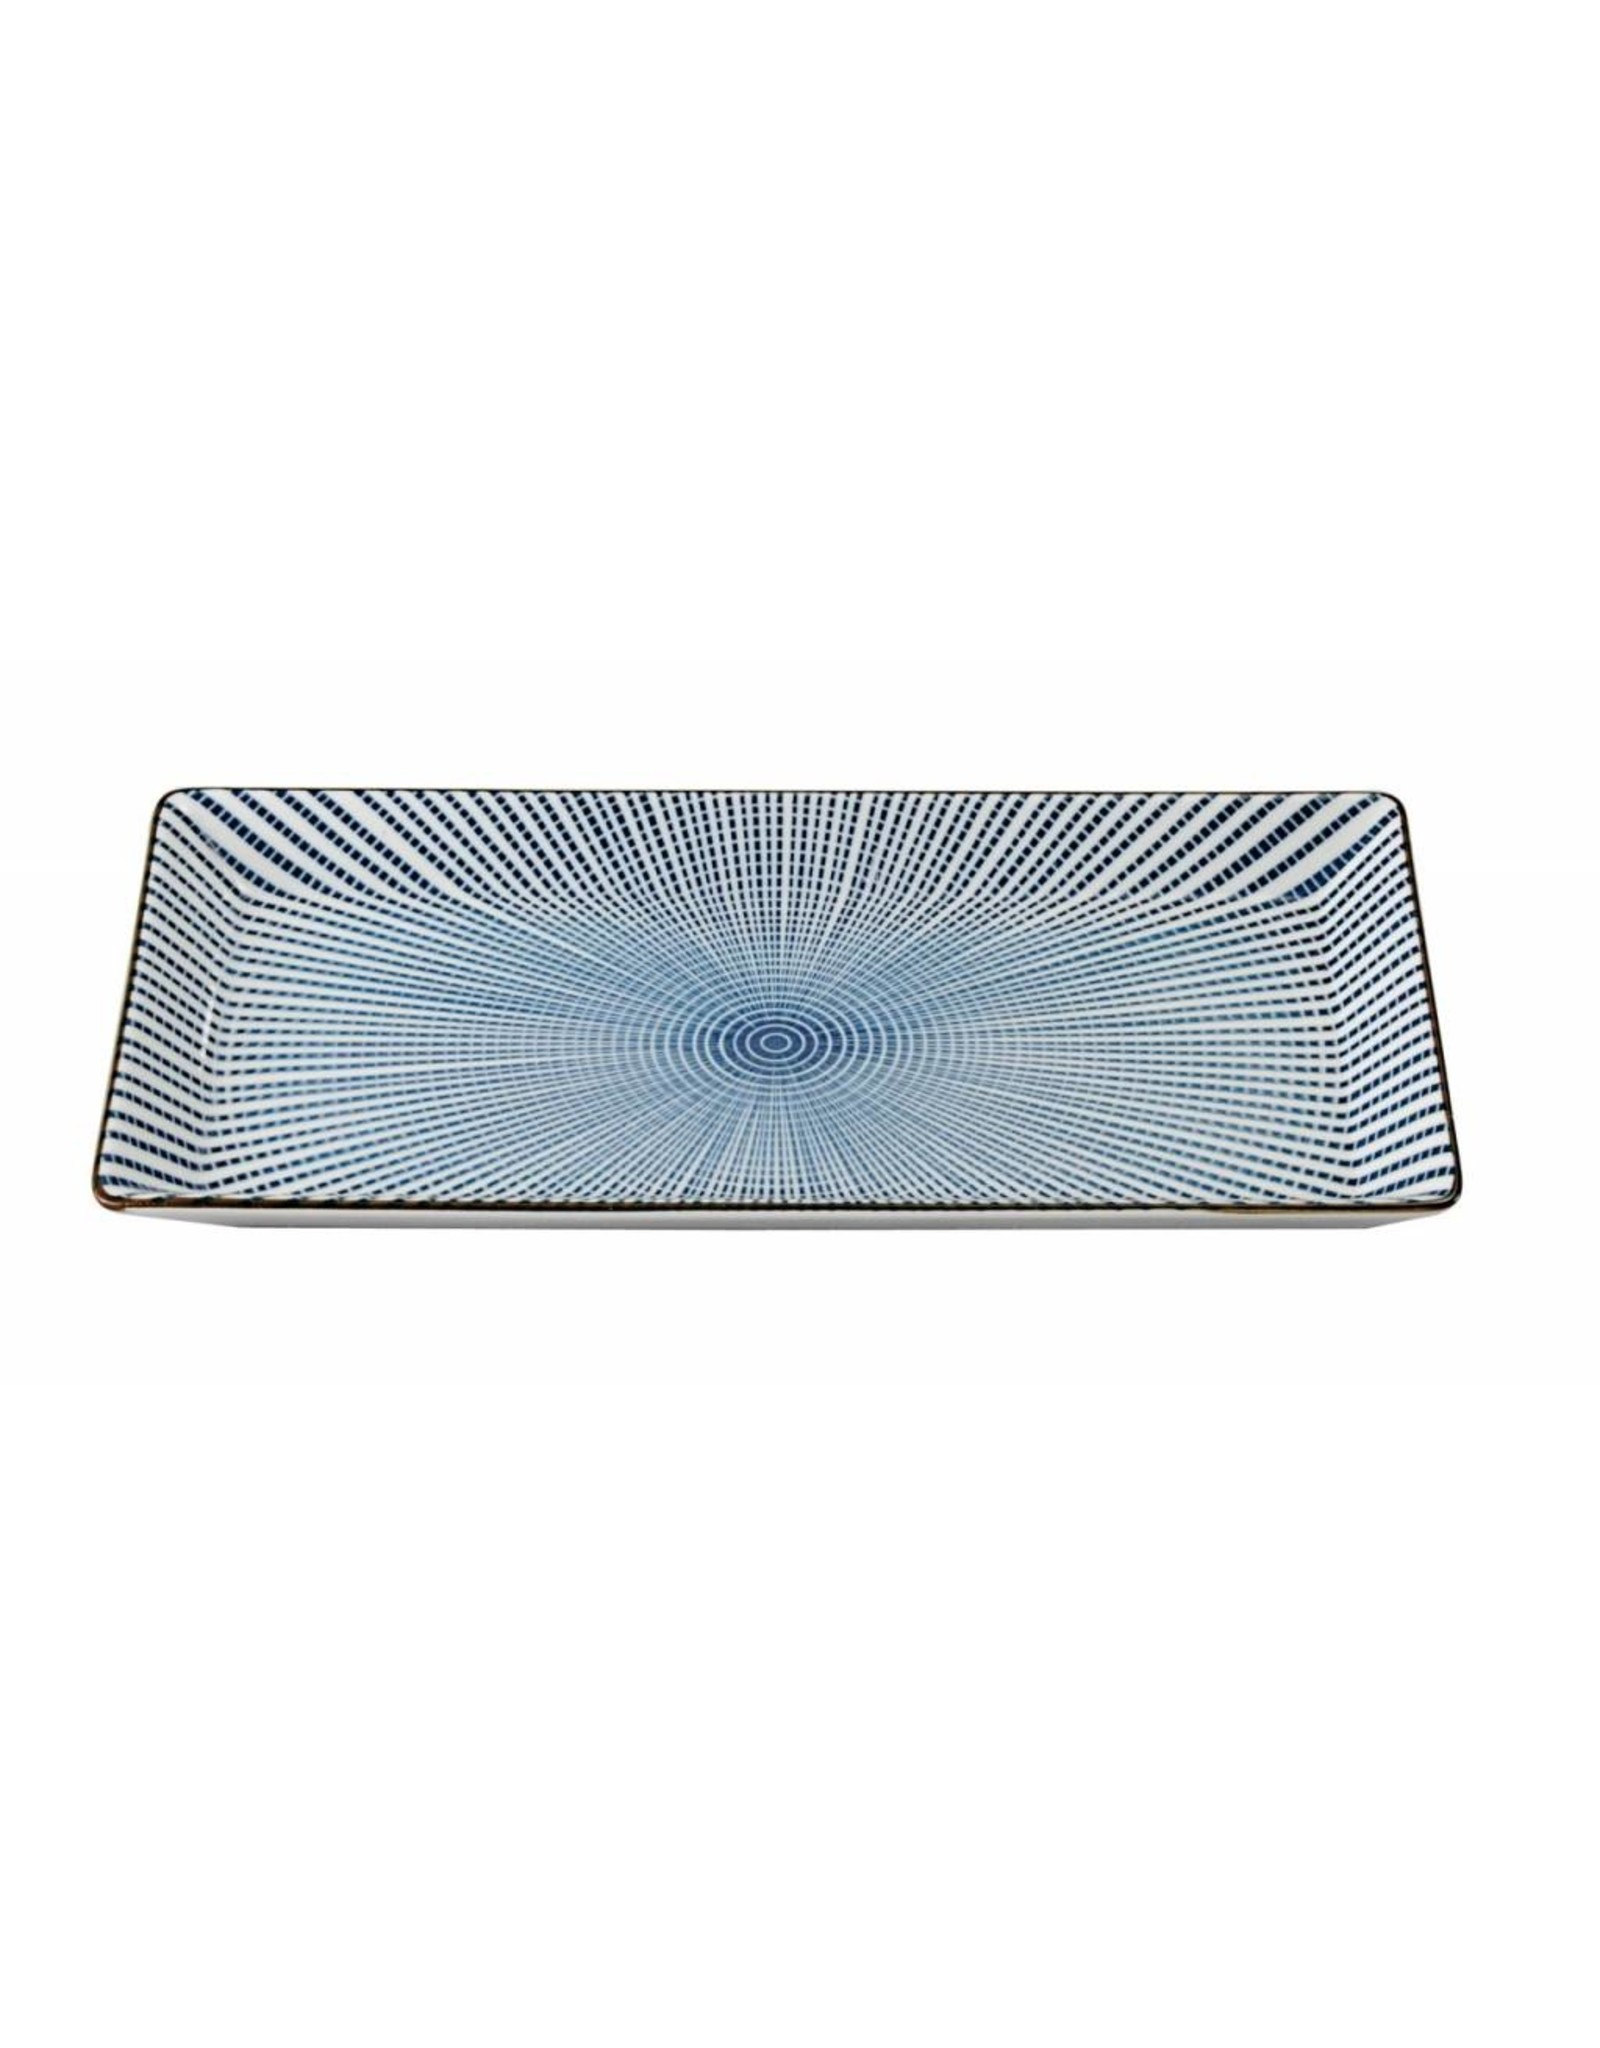 Tokyo Design Studio Sendan Blue rectangular plate/dish 23x11.5x2.3cm